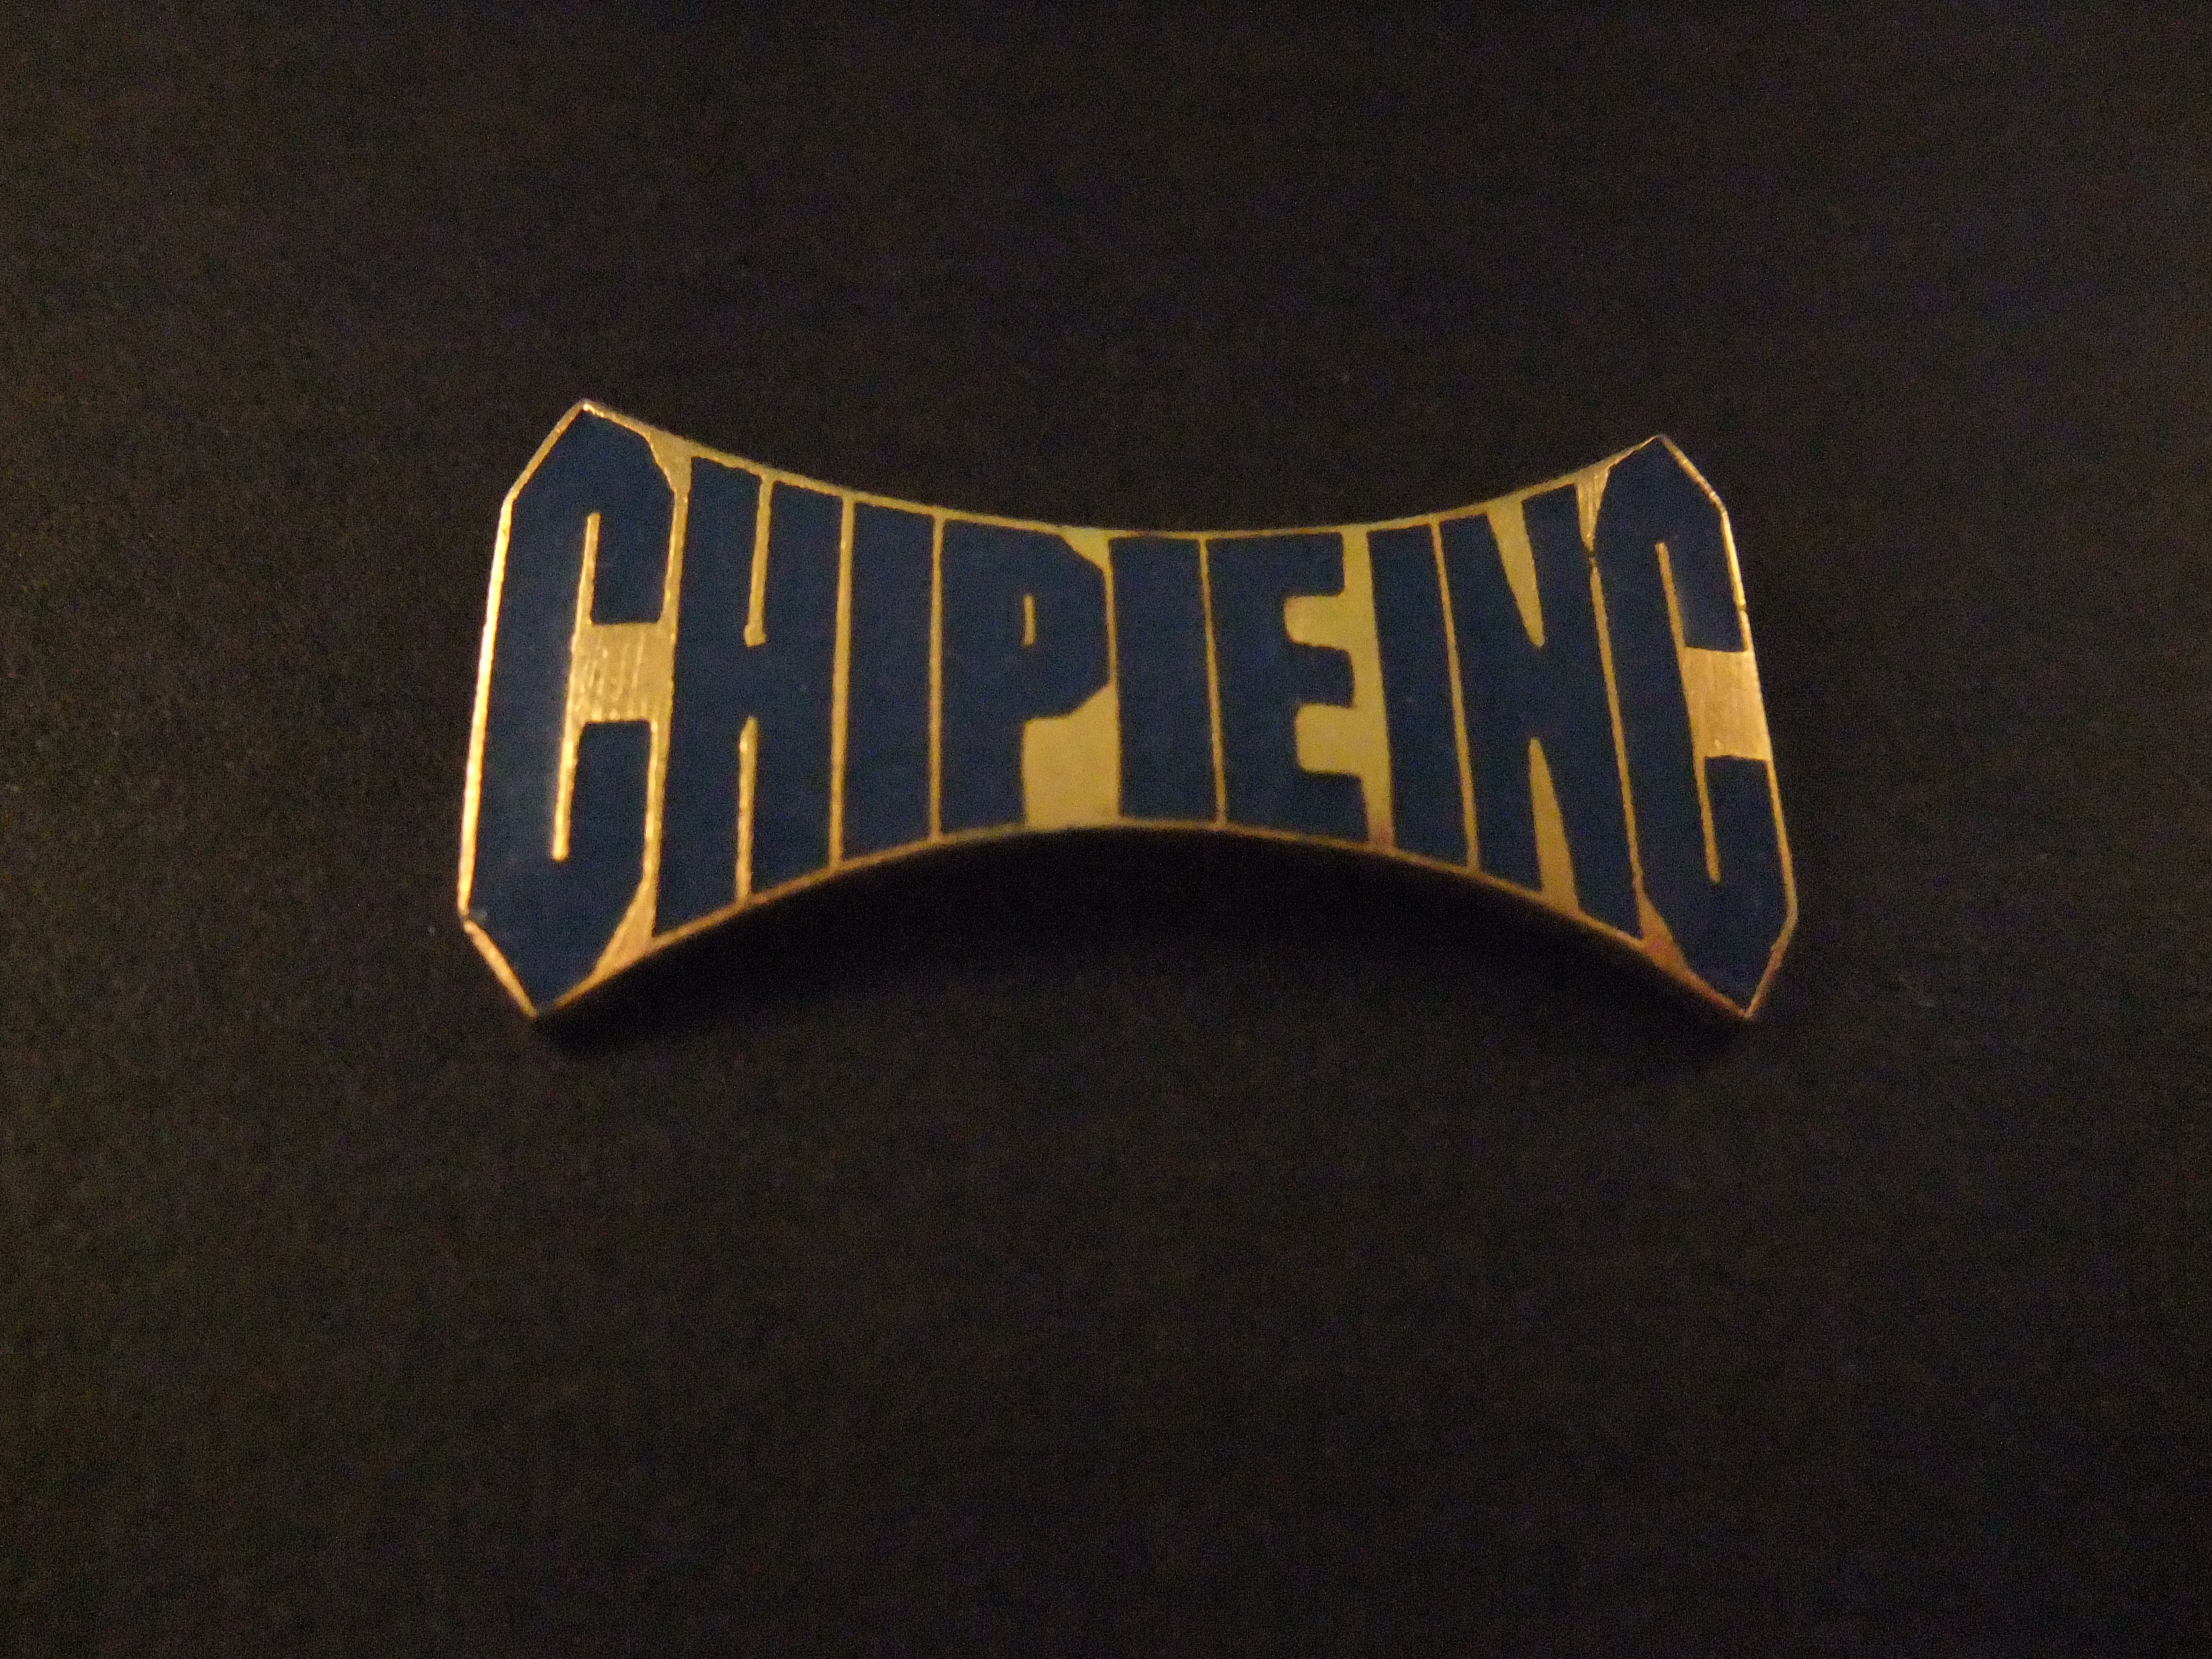 Chippie Company ( Kleding) logo